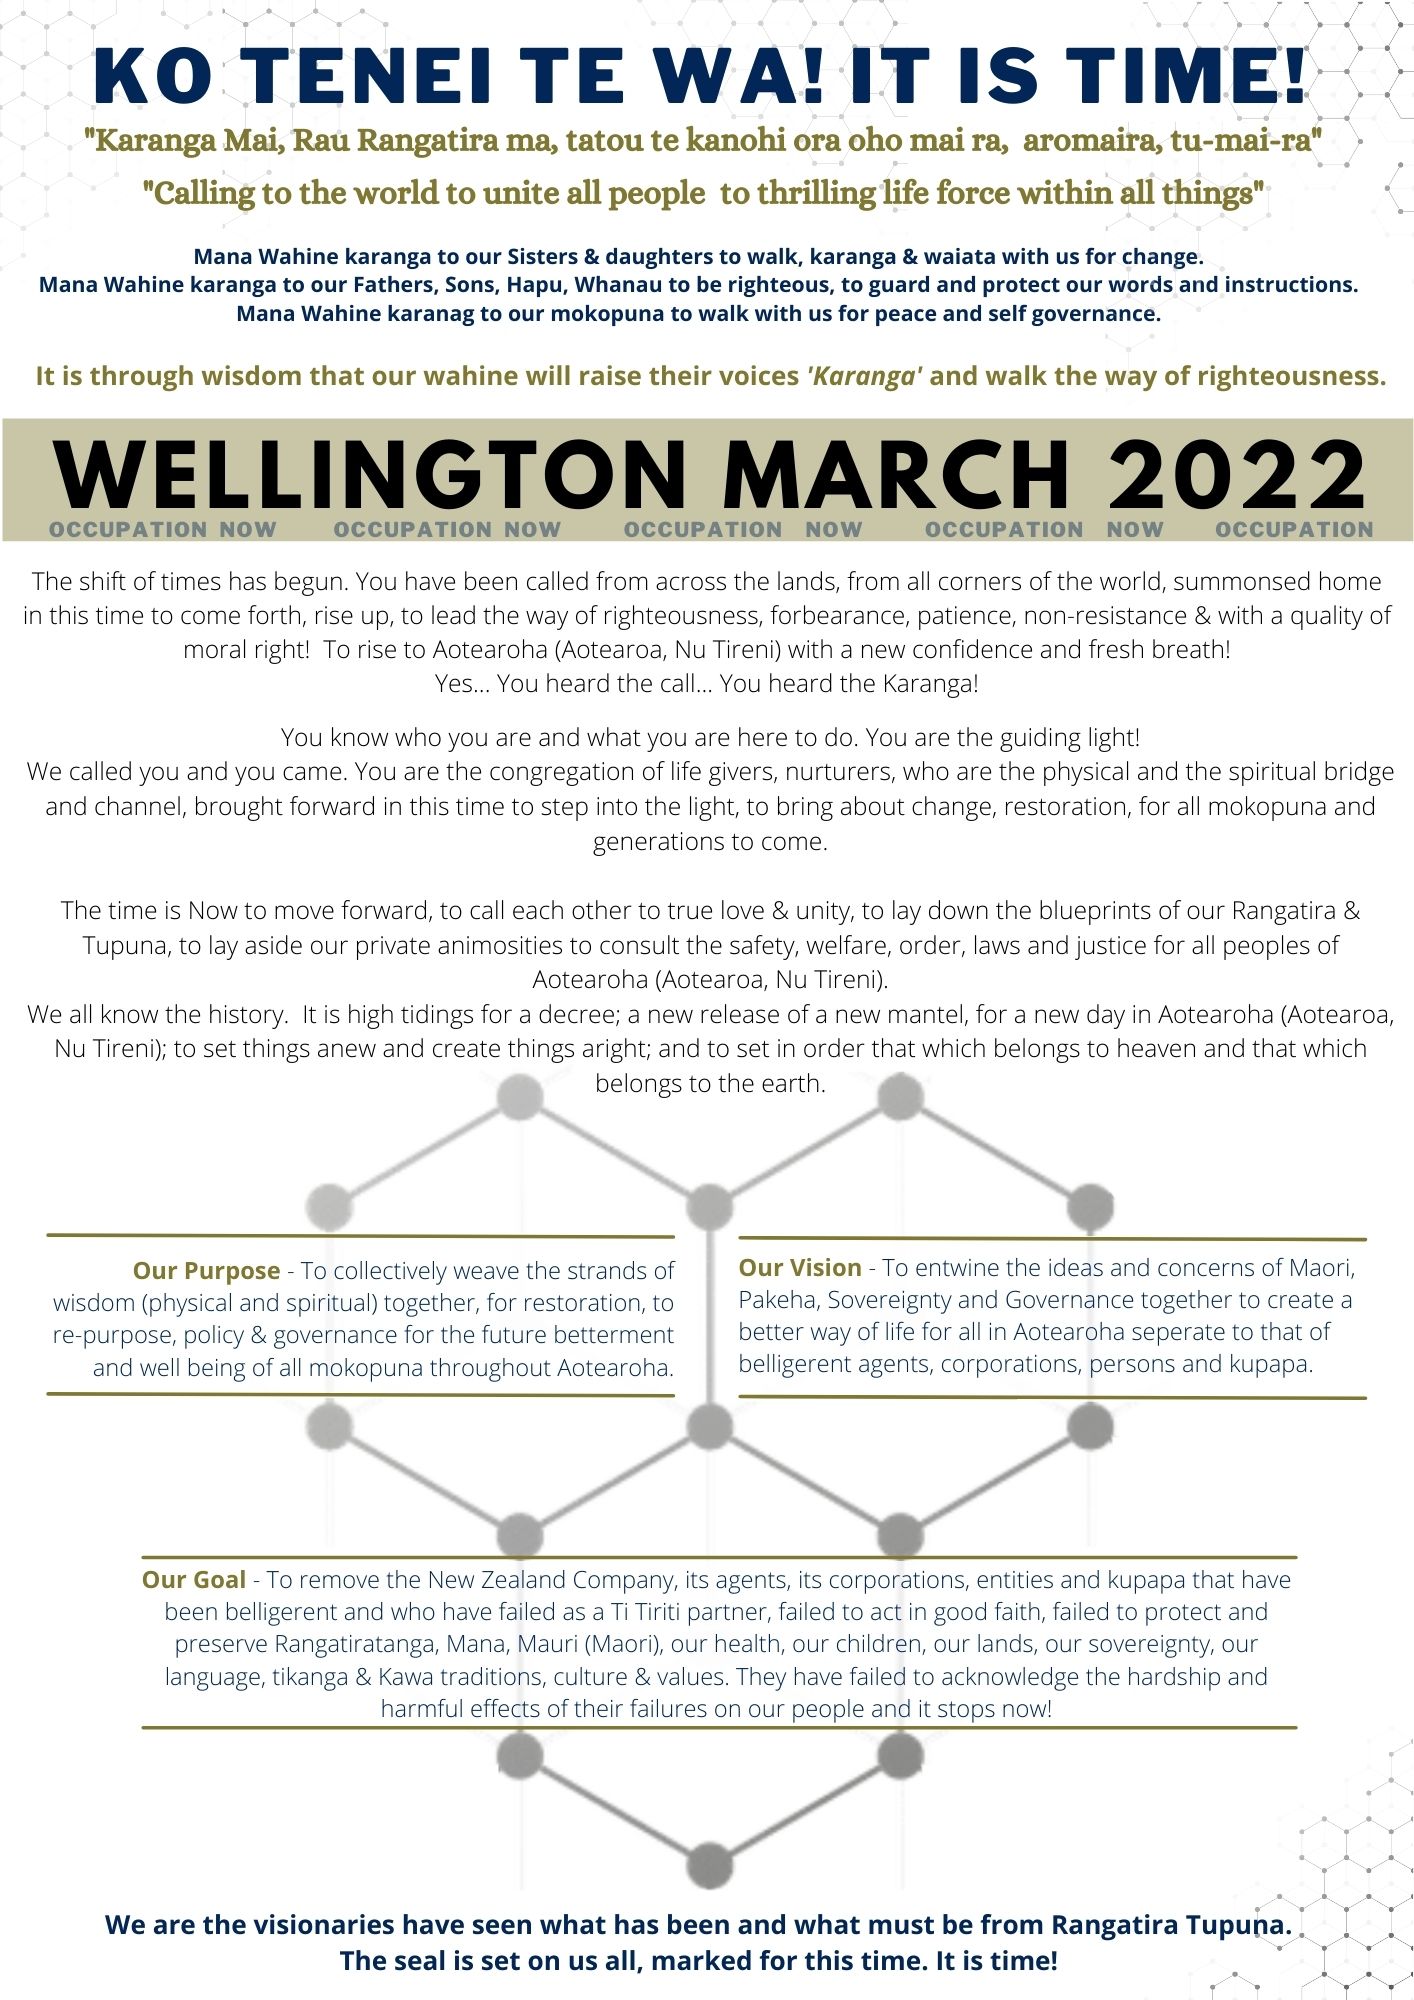 MANA WAHINE KARANGA FOR MAURI IN WELLINGTON MARCH 2022